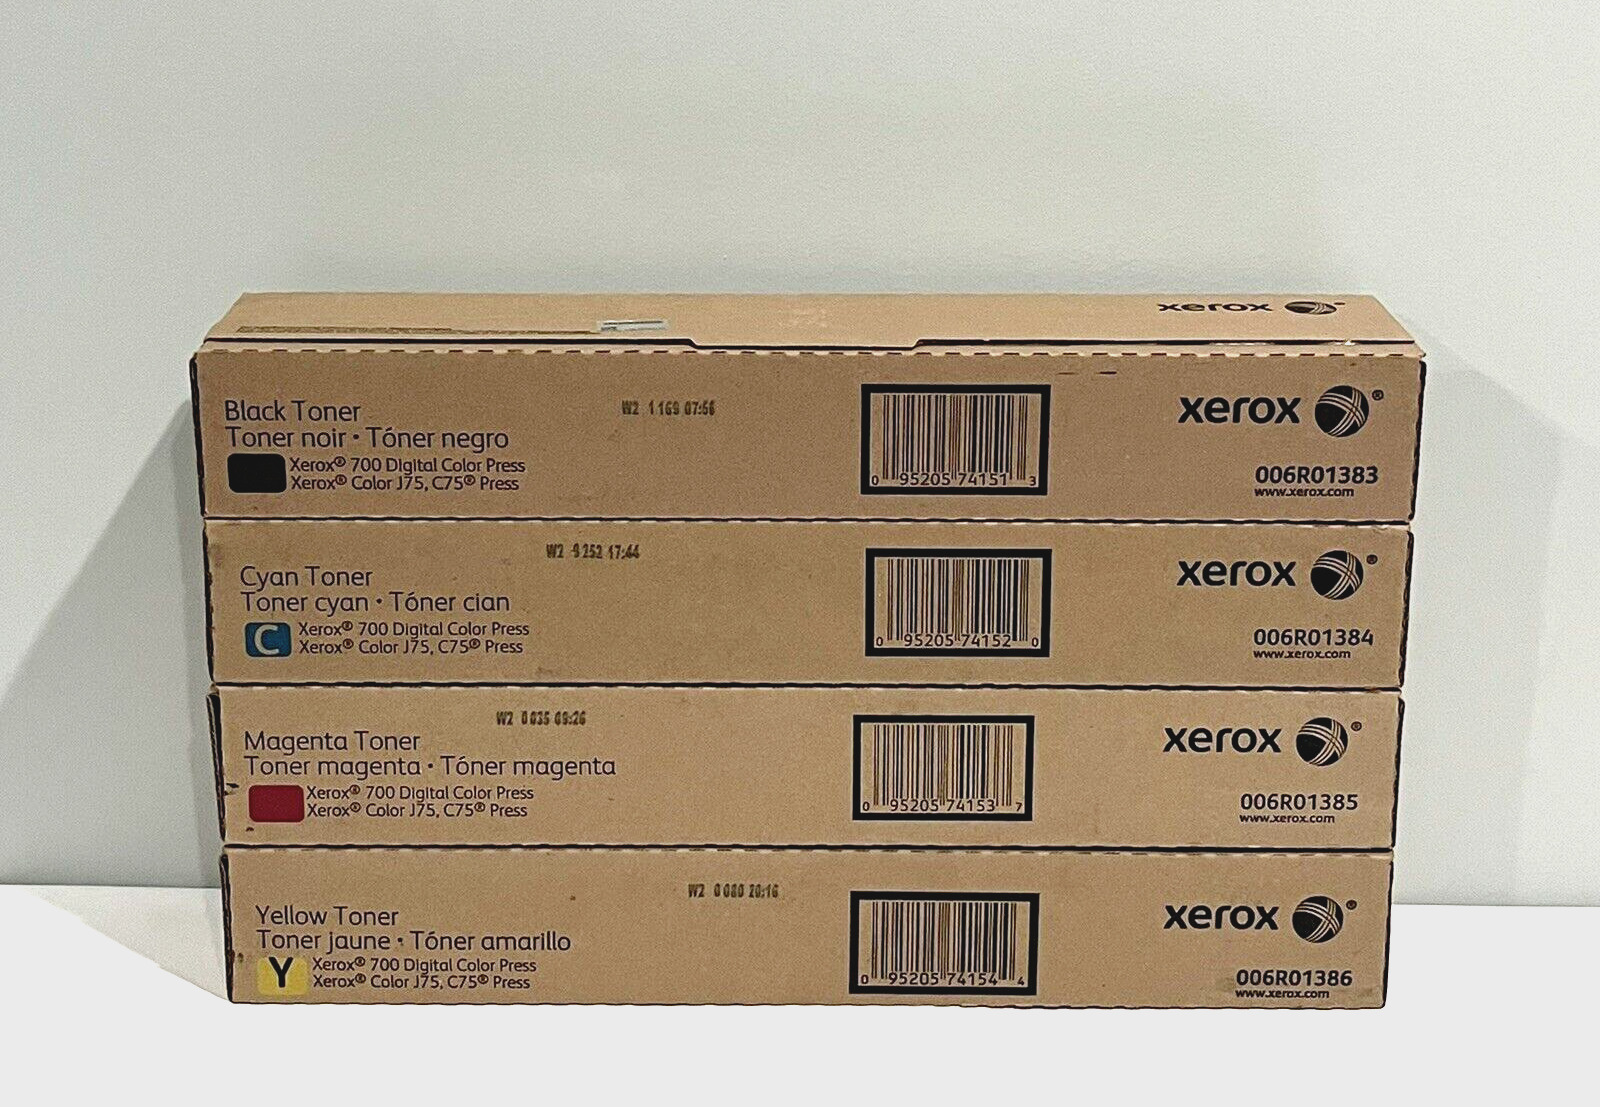 Xerox 700 Toner Cartridge set 006R01383,6R1384,6R1385,6R1386 Genuine Sealed New